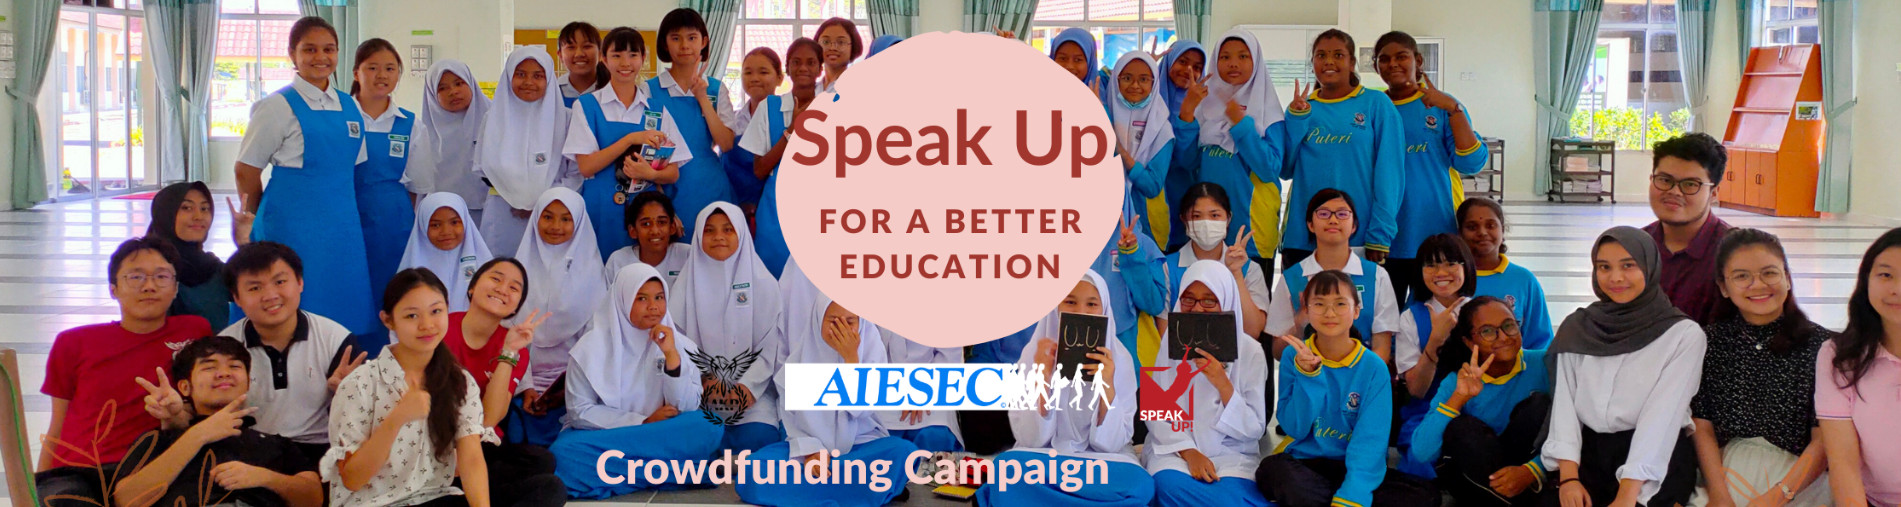 For A Better Education - Speak Up